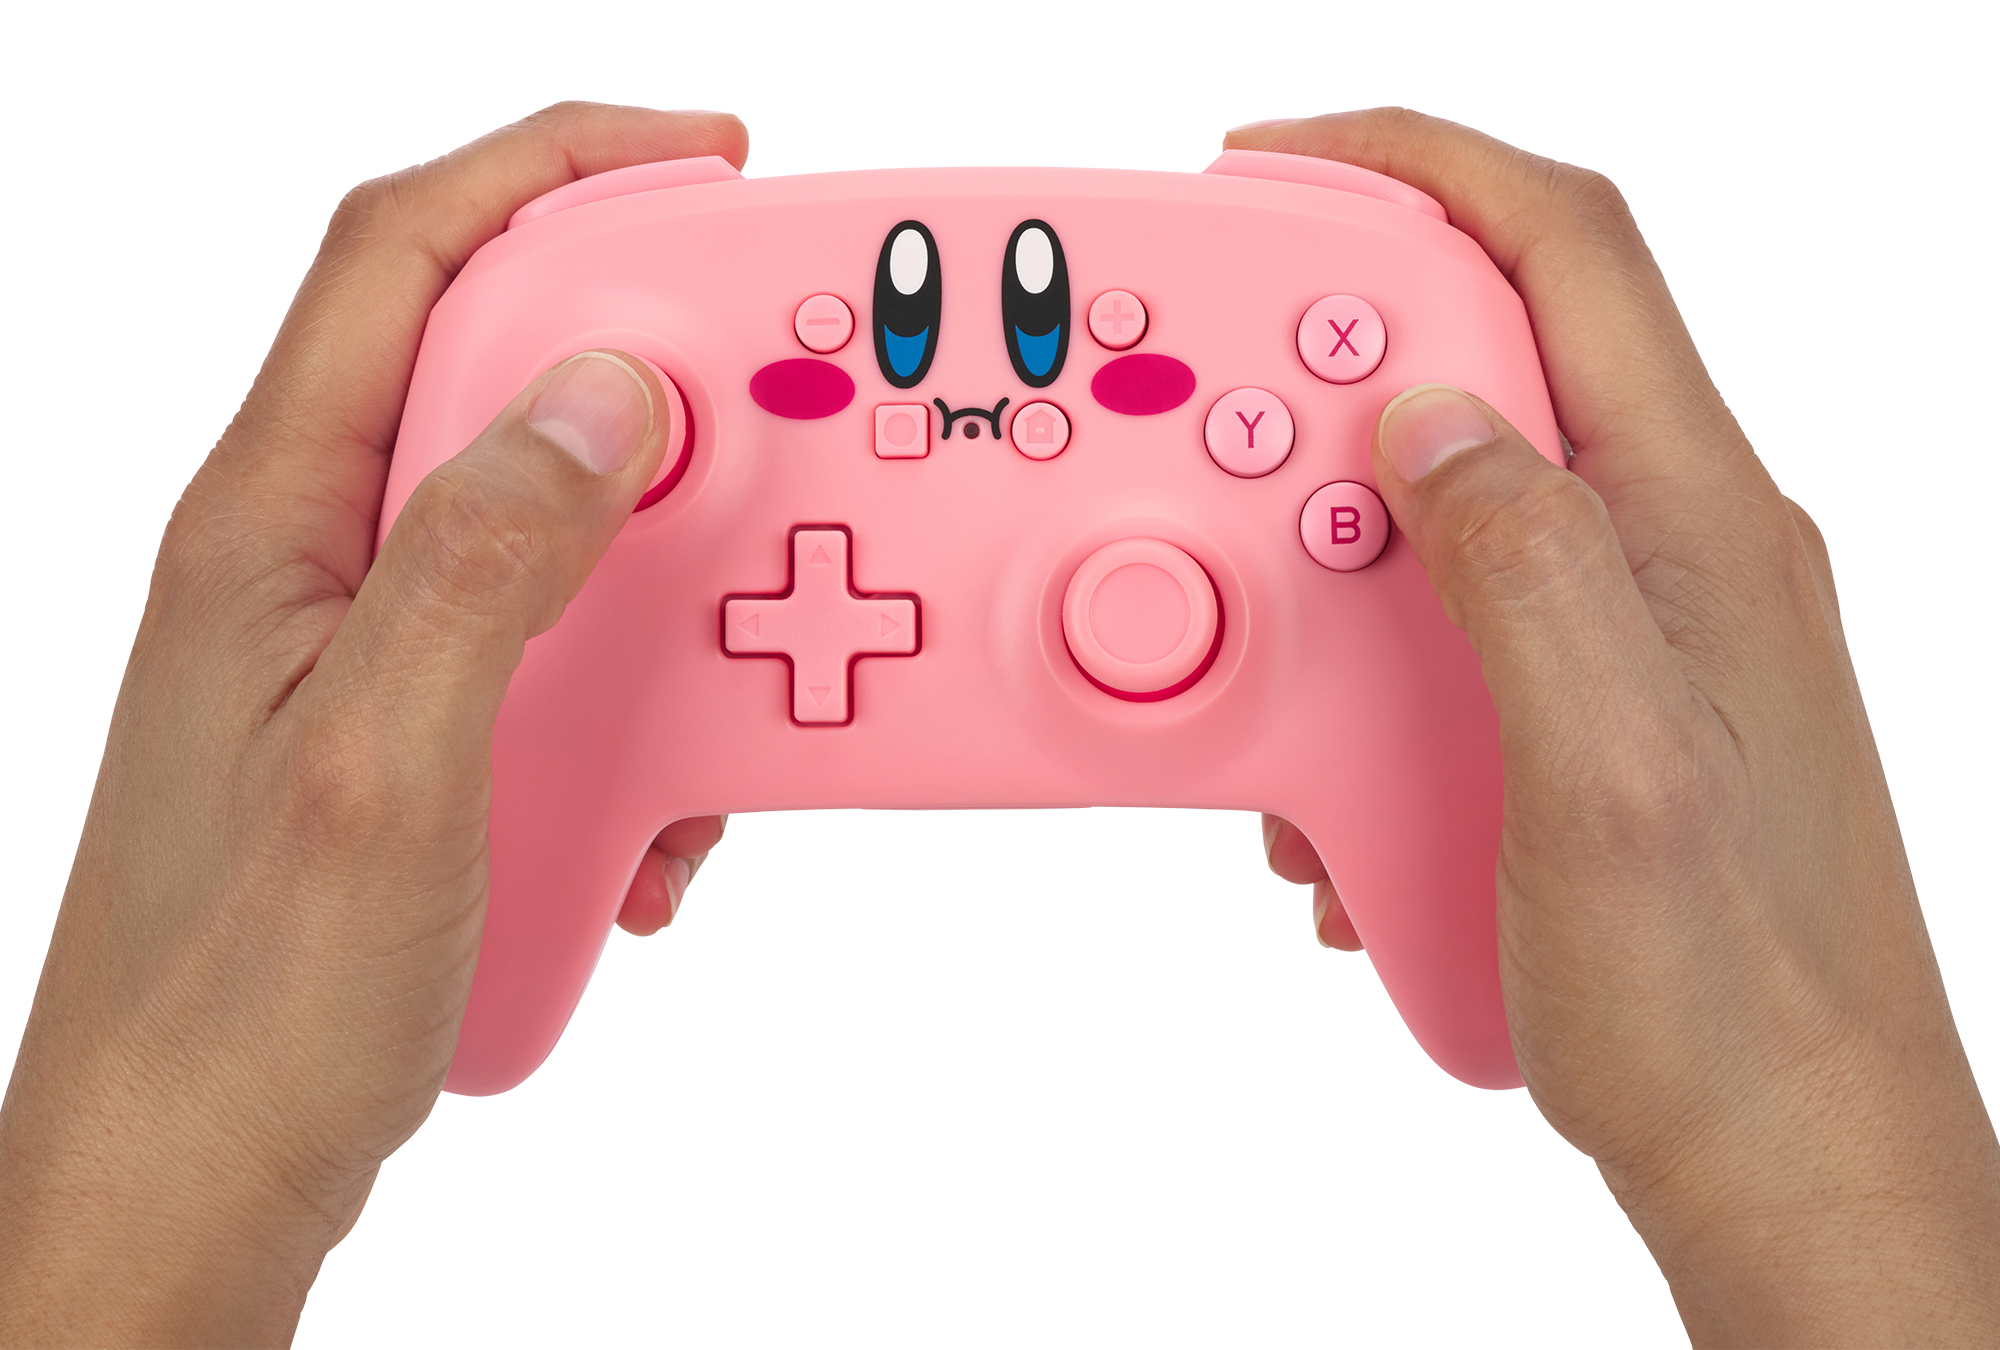 PowerA Wireless Controller for Nintendo Switch Kirby